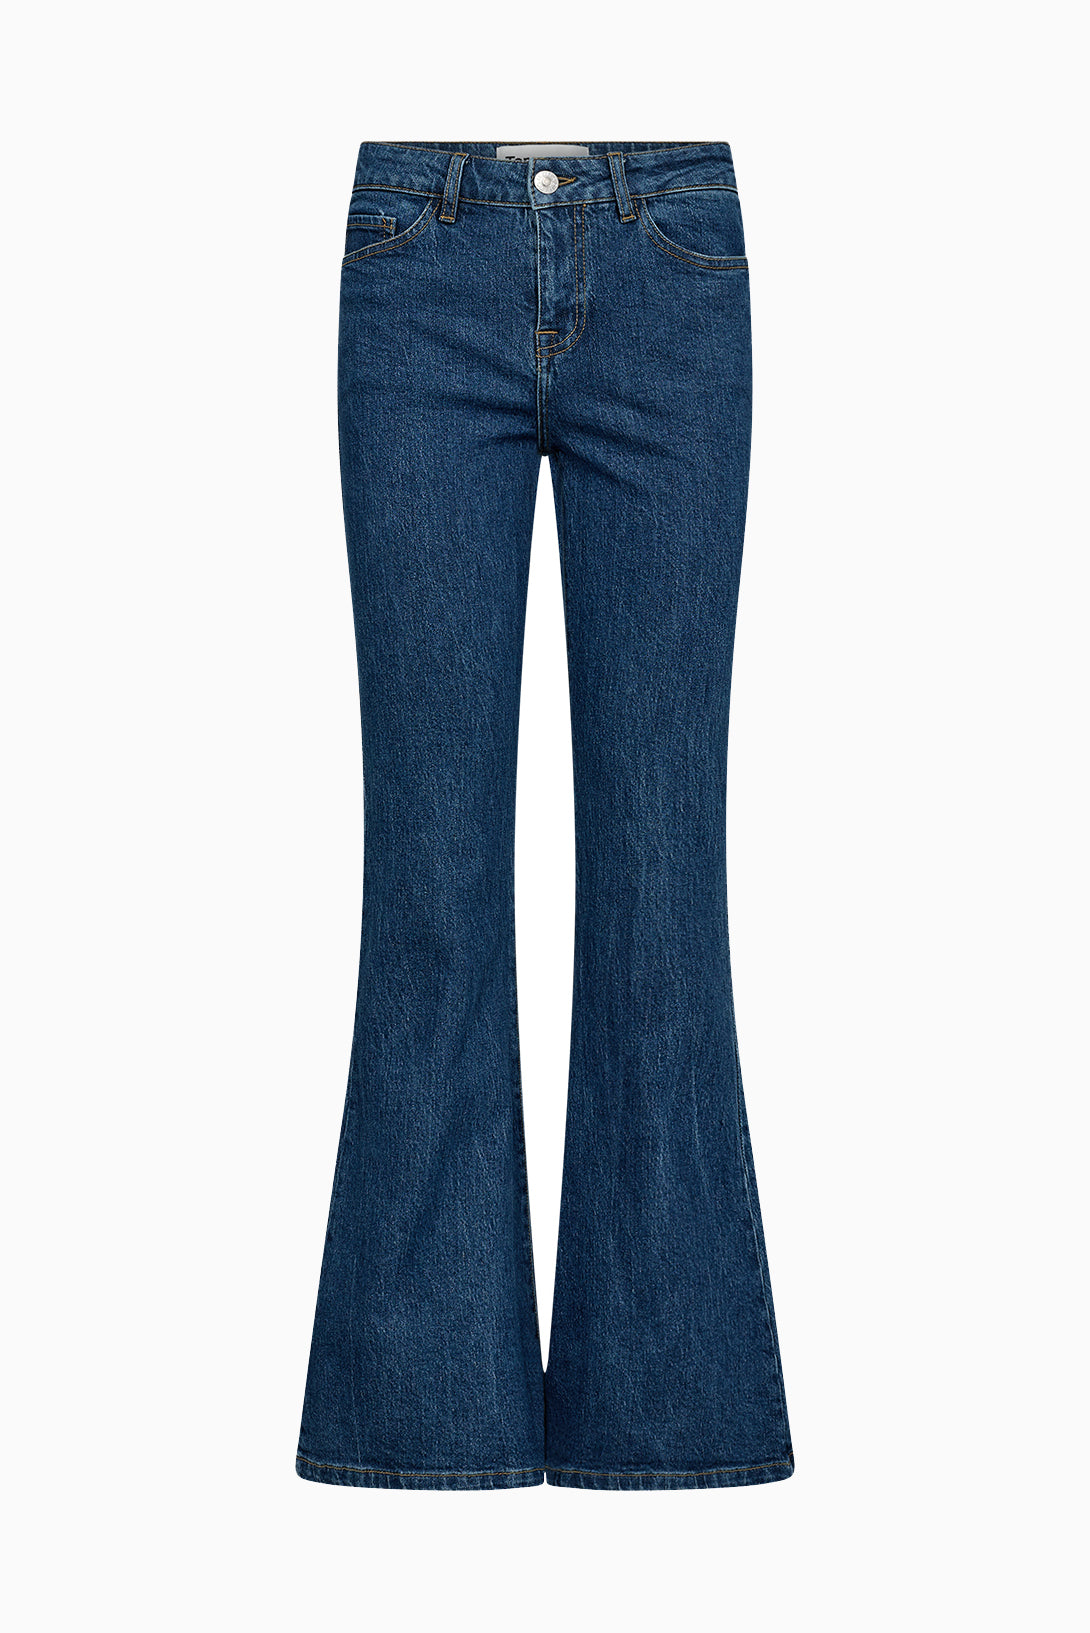 Tomorrow TMRW Jenna Jeans - Phoenix Jeans & Pants 51 Denim Blue